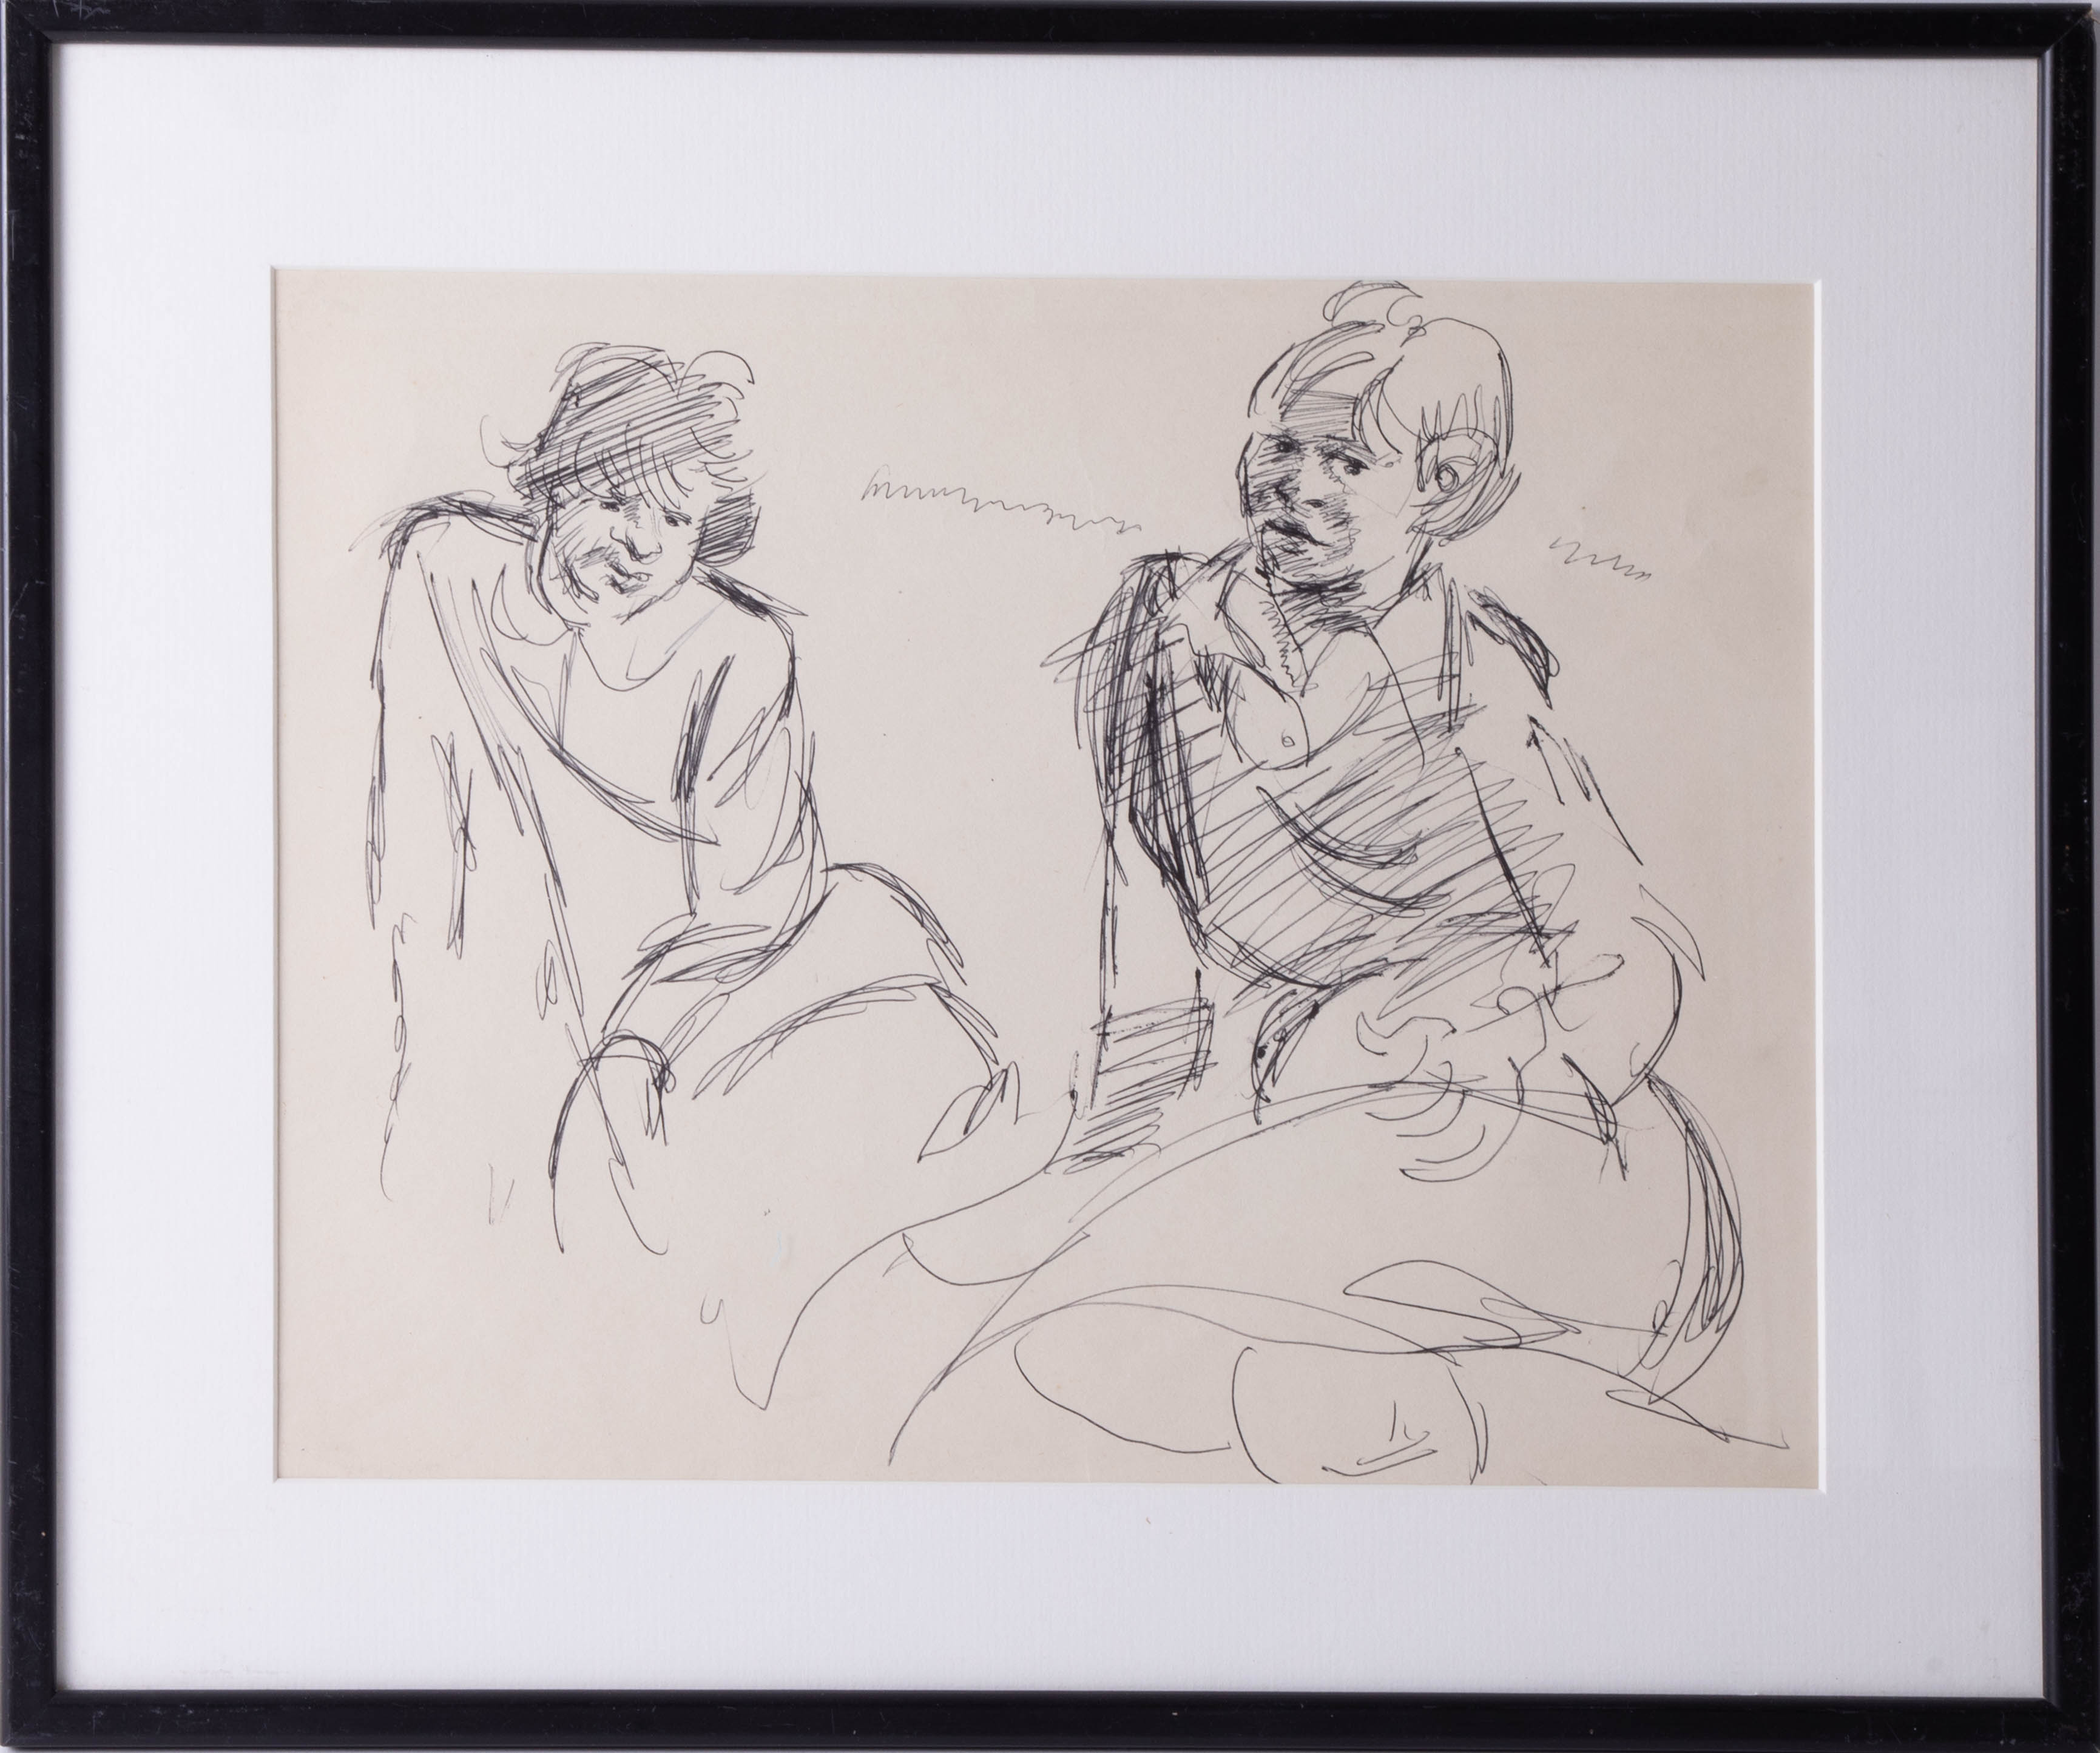 Robert Lenkiewicz, early black biro drawing of two figures, 26cm x 33cm, framed and glazed.